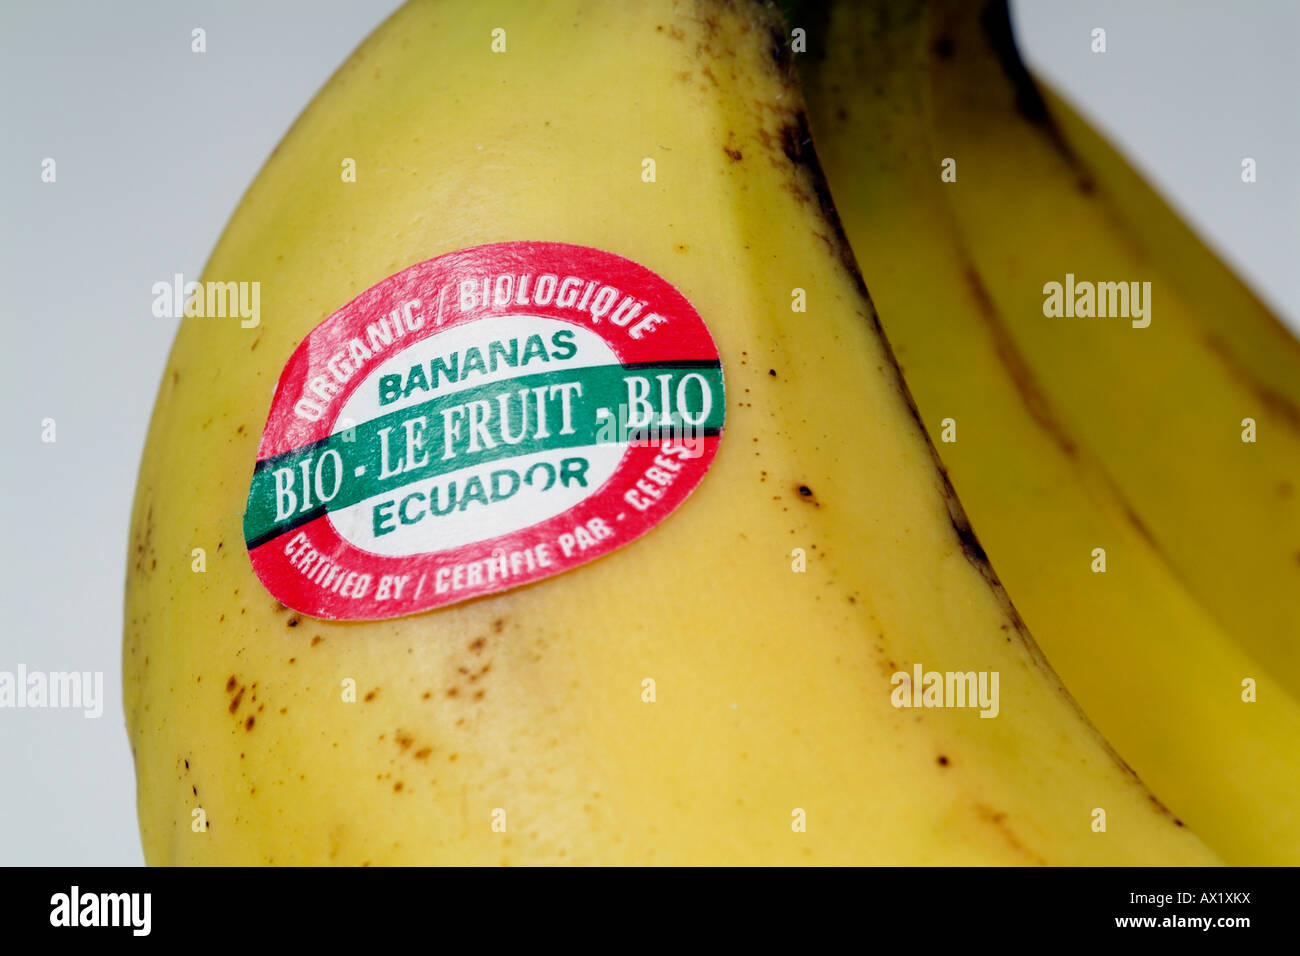 Photo Label with Banana Ecuador - Certification Fairtrade Banana Alamy product sticker Stock Organic Bio